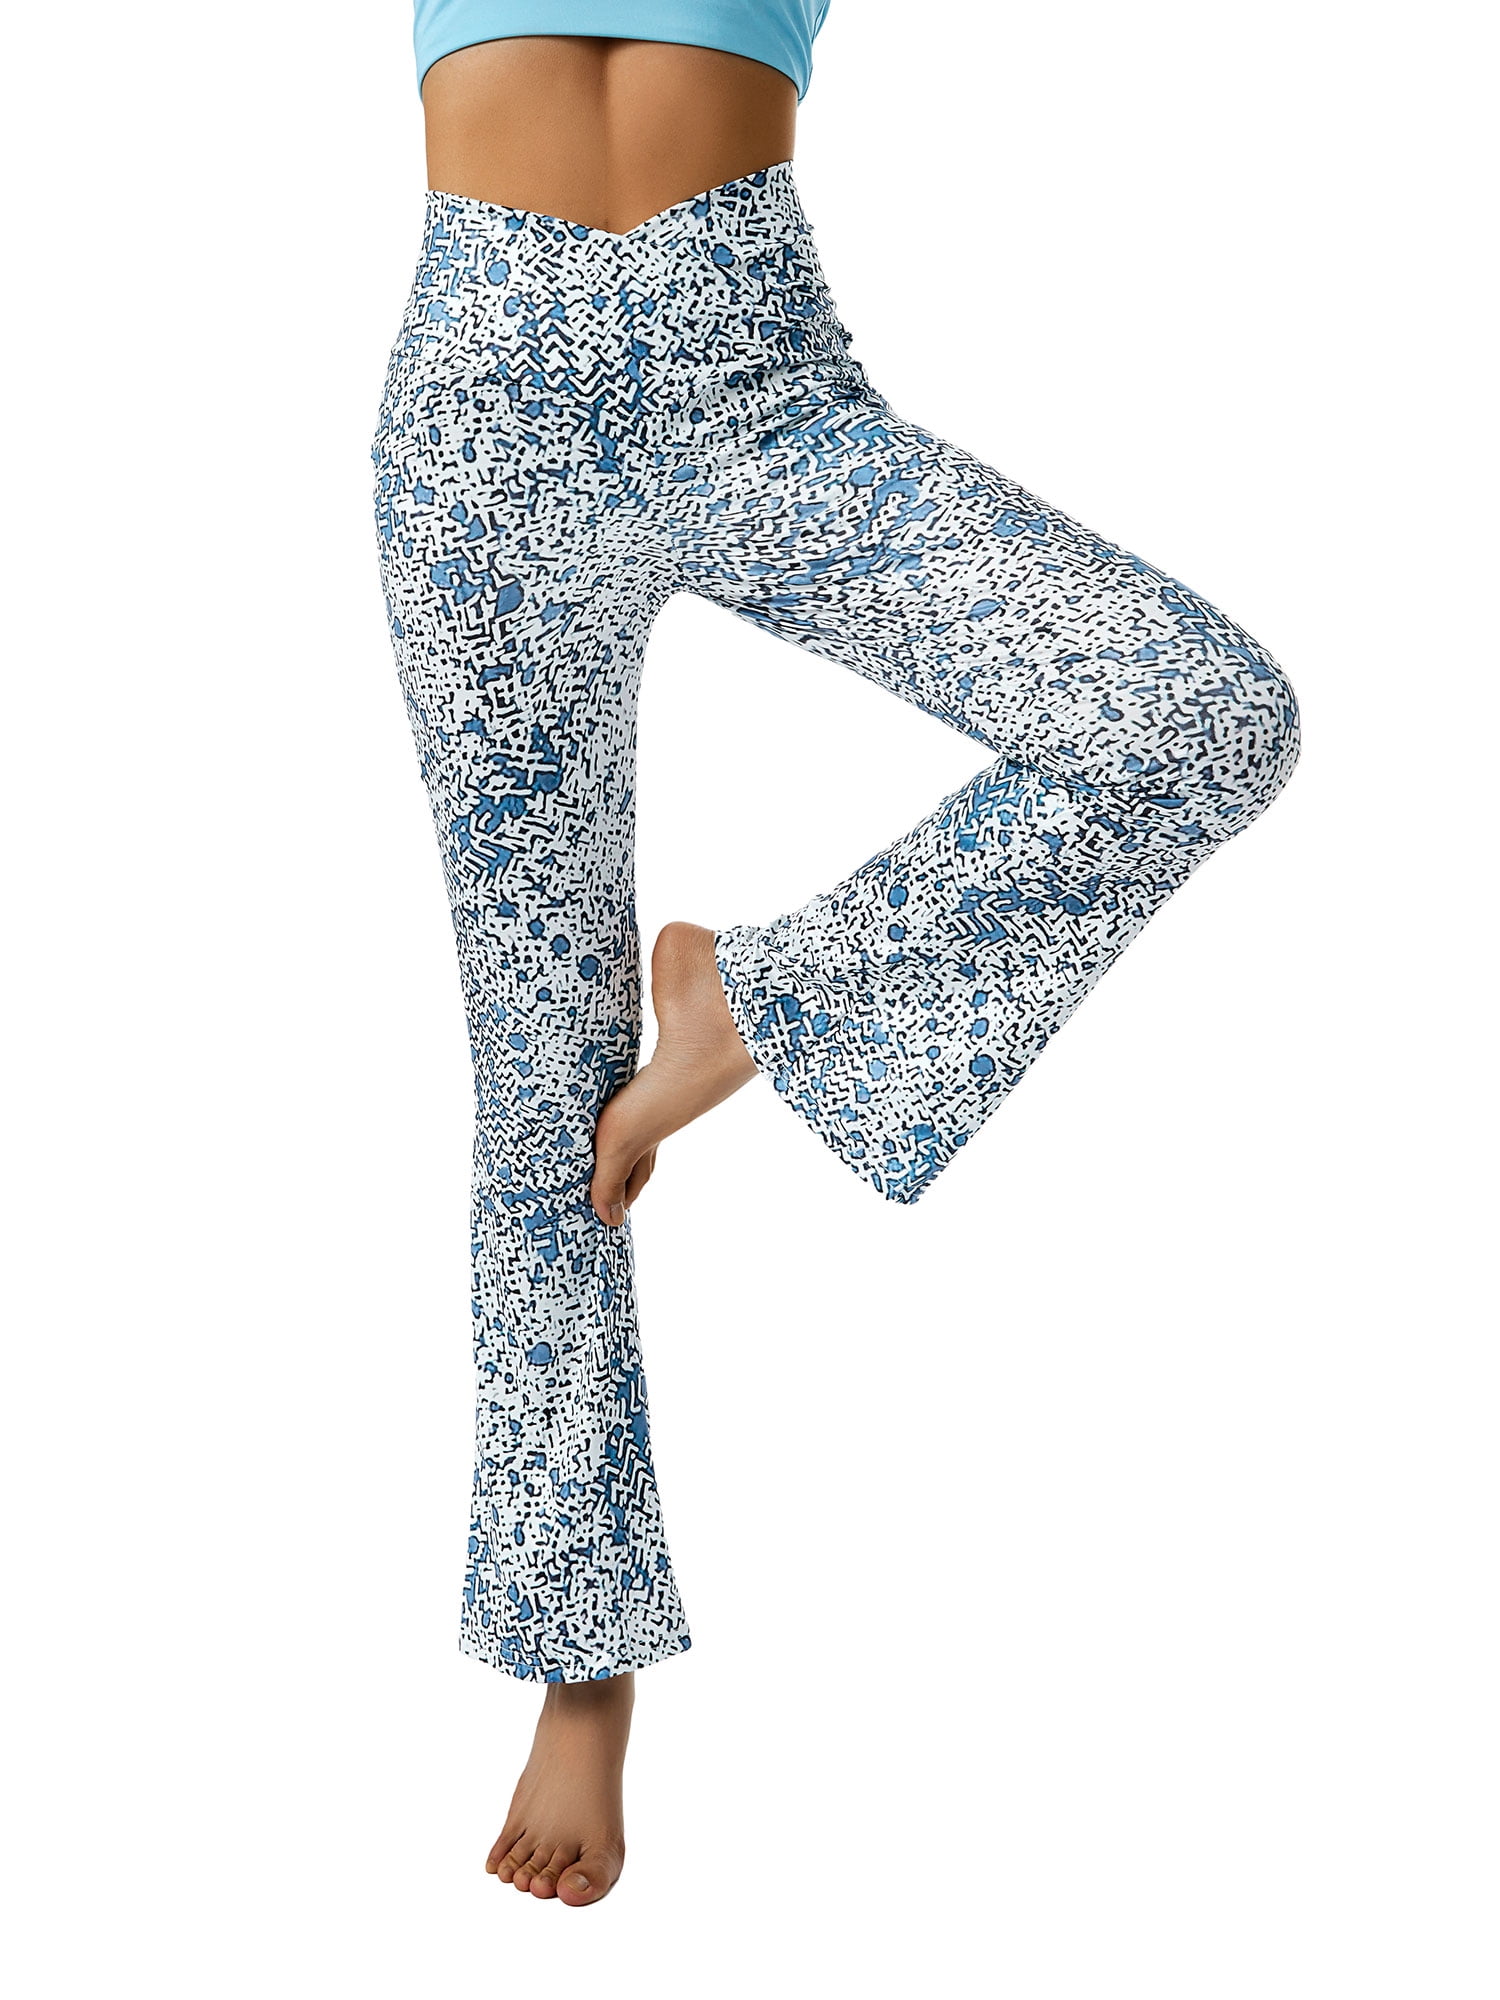 Raruxxin Women V Cross Waist Leggings Slim Flared Yoga Pants Solid Color/  Tie-dyed Printed Female Leggings for Fitness Gym